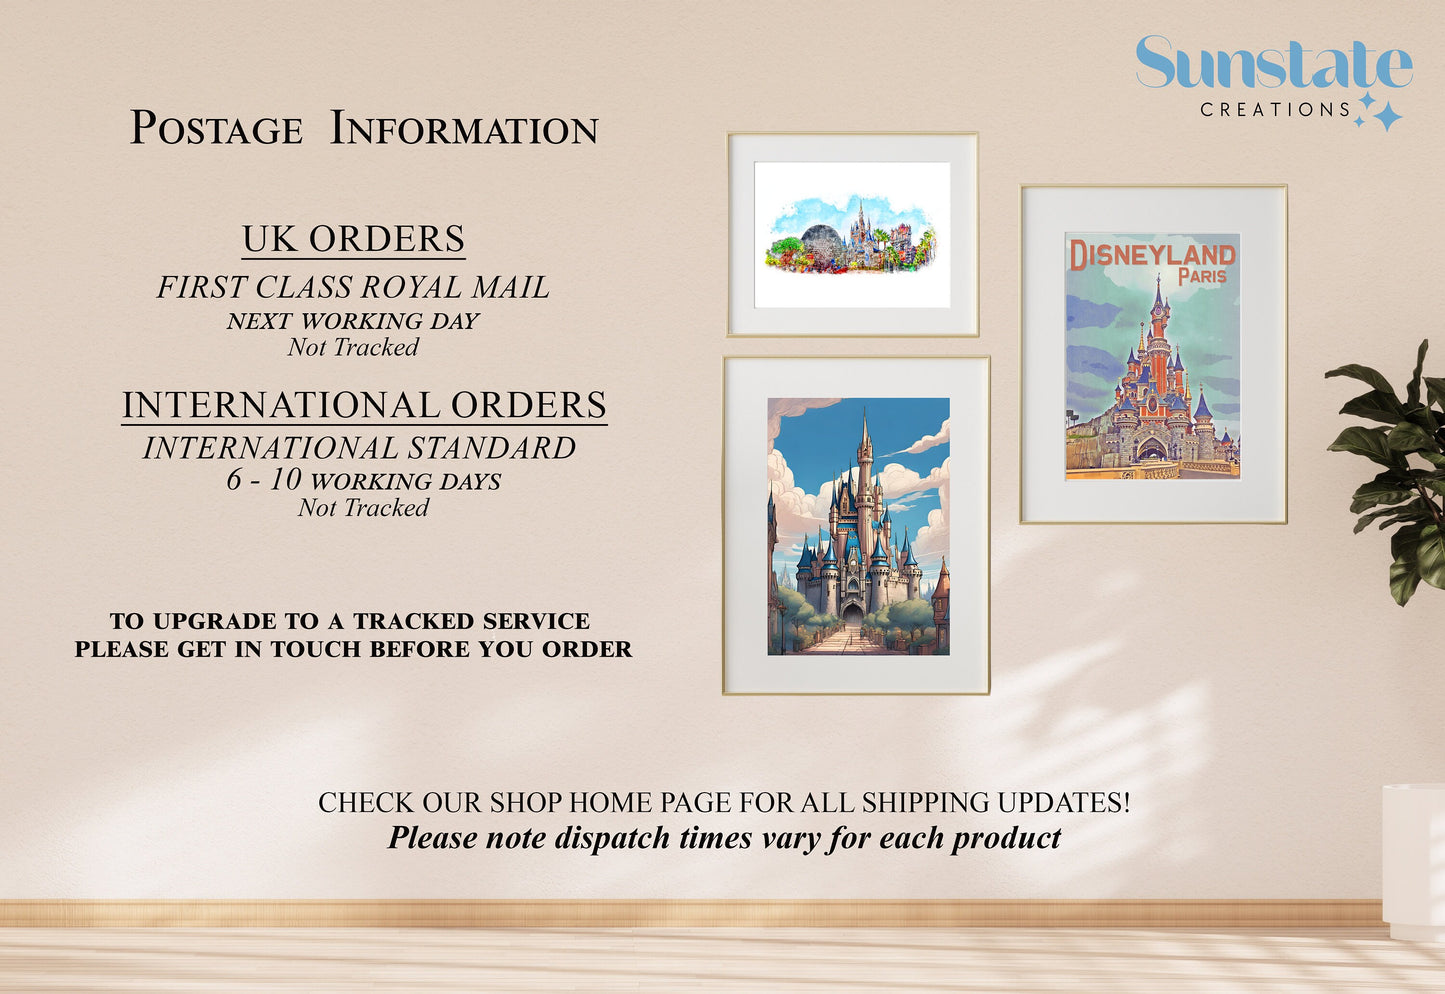 Magic Kingdom Retro Disney Poster, Disney Prints, Cinderella Castle, Retro Walt Disney World Prints, Disney Wall Art, Disney Park Prints